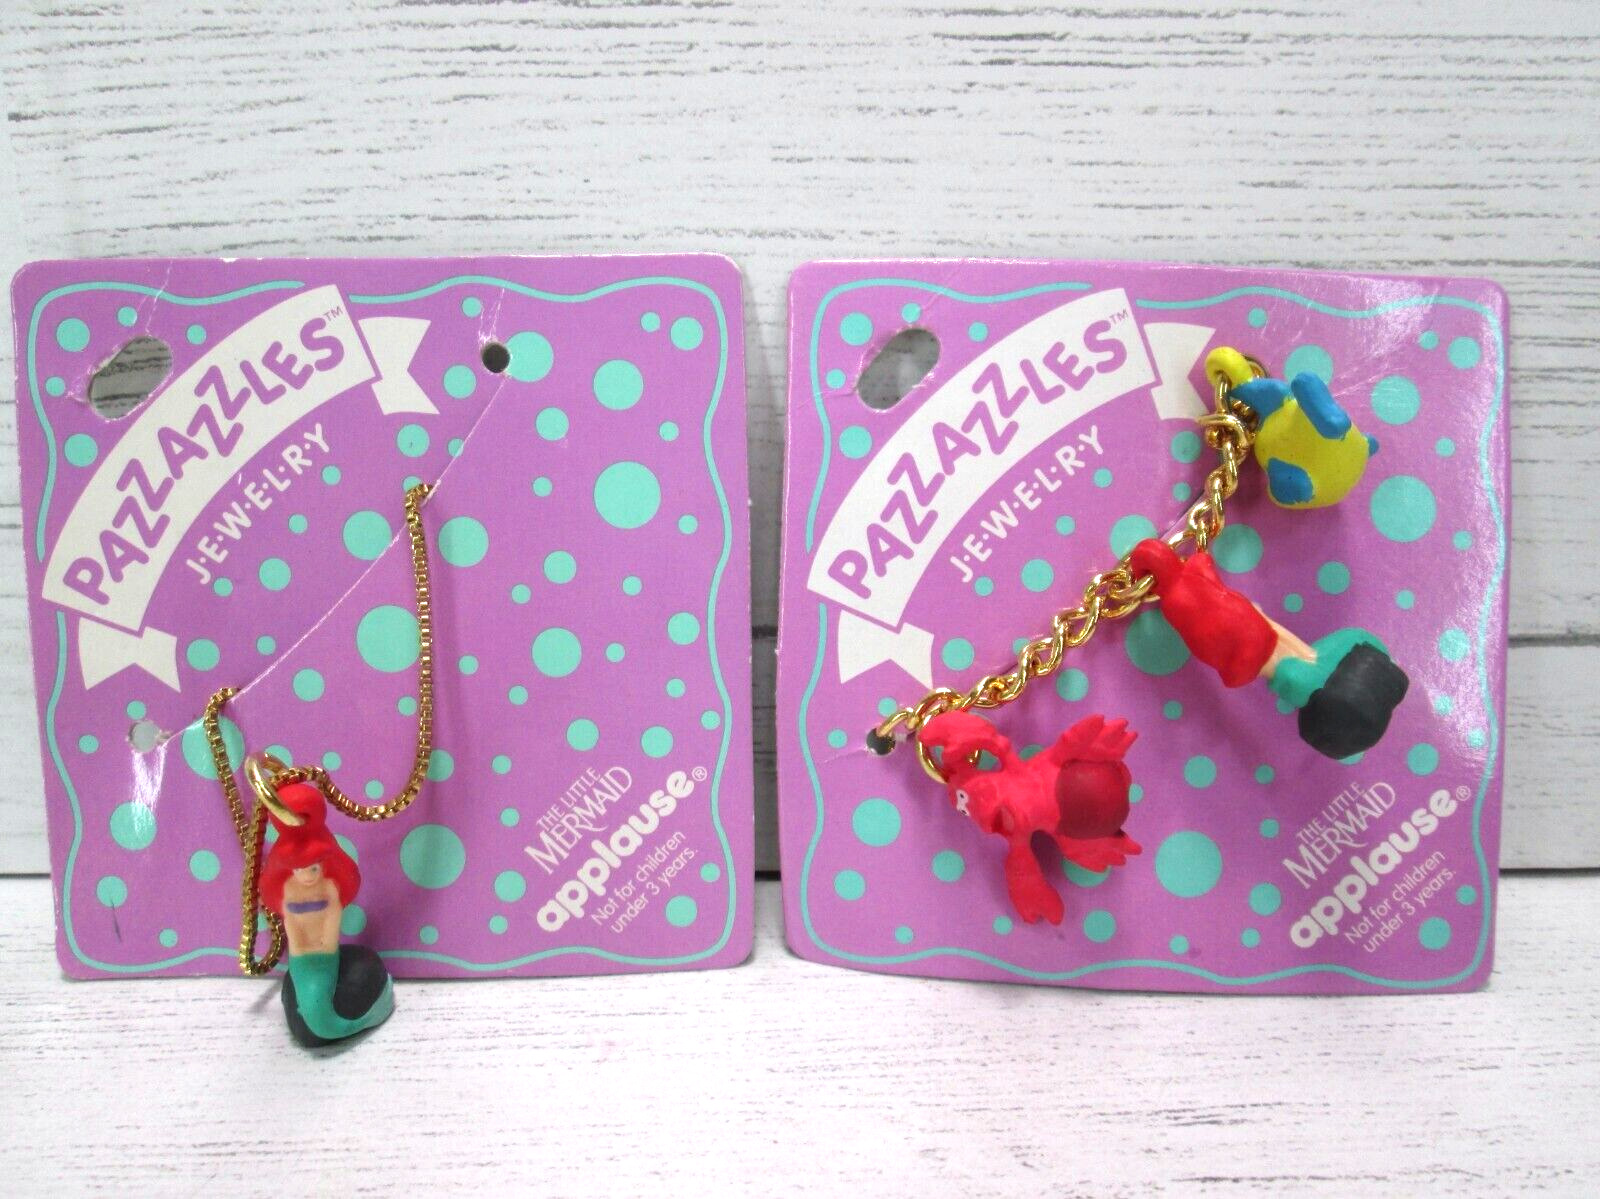 Vintage The Little Mermaid Charm Bracelet Necklace Pazzazzles Disney Jewelry New